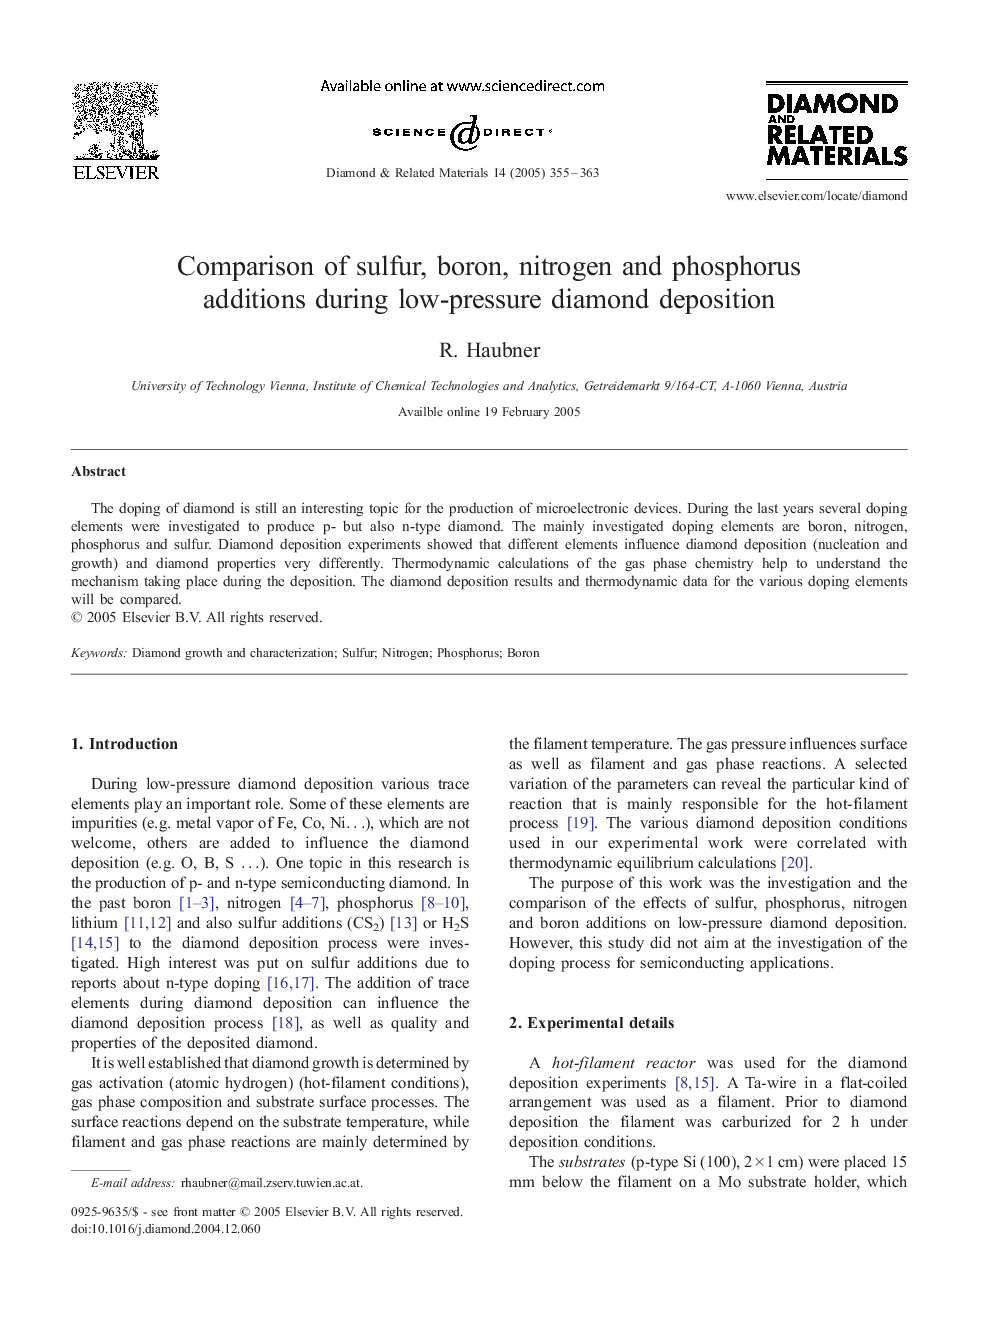 Comparison of sulfur, boron, nitrogen and phosphorus additions during low-pressure diamond deposition